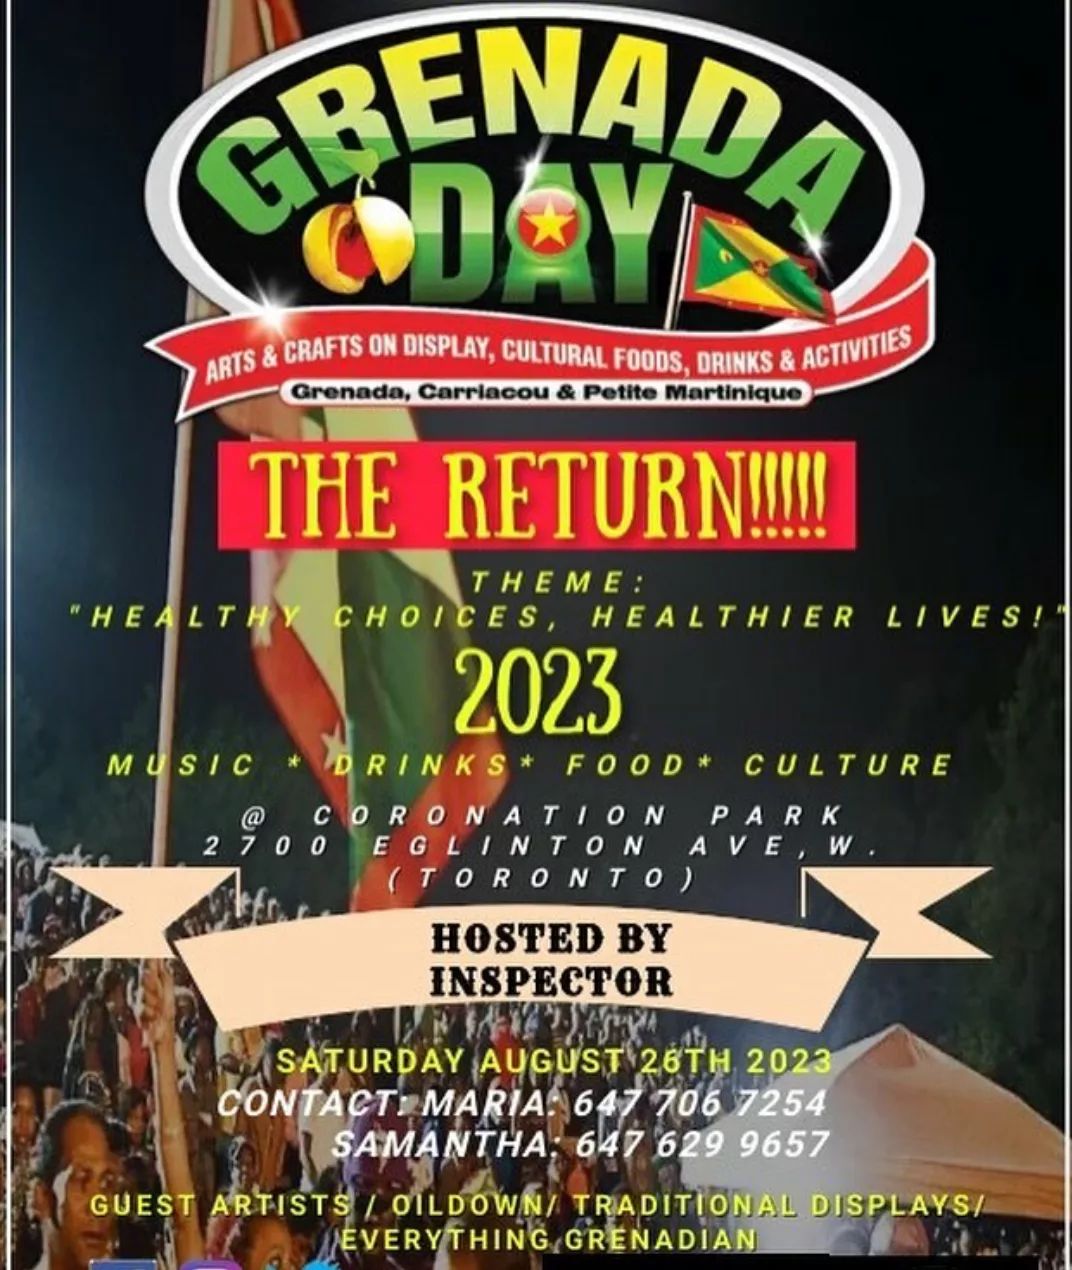 The long awaited Return of
GRENADA DAY Toronto
@grenadadayfestivalto

Happens this Saturday August 26th,2023